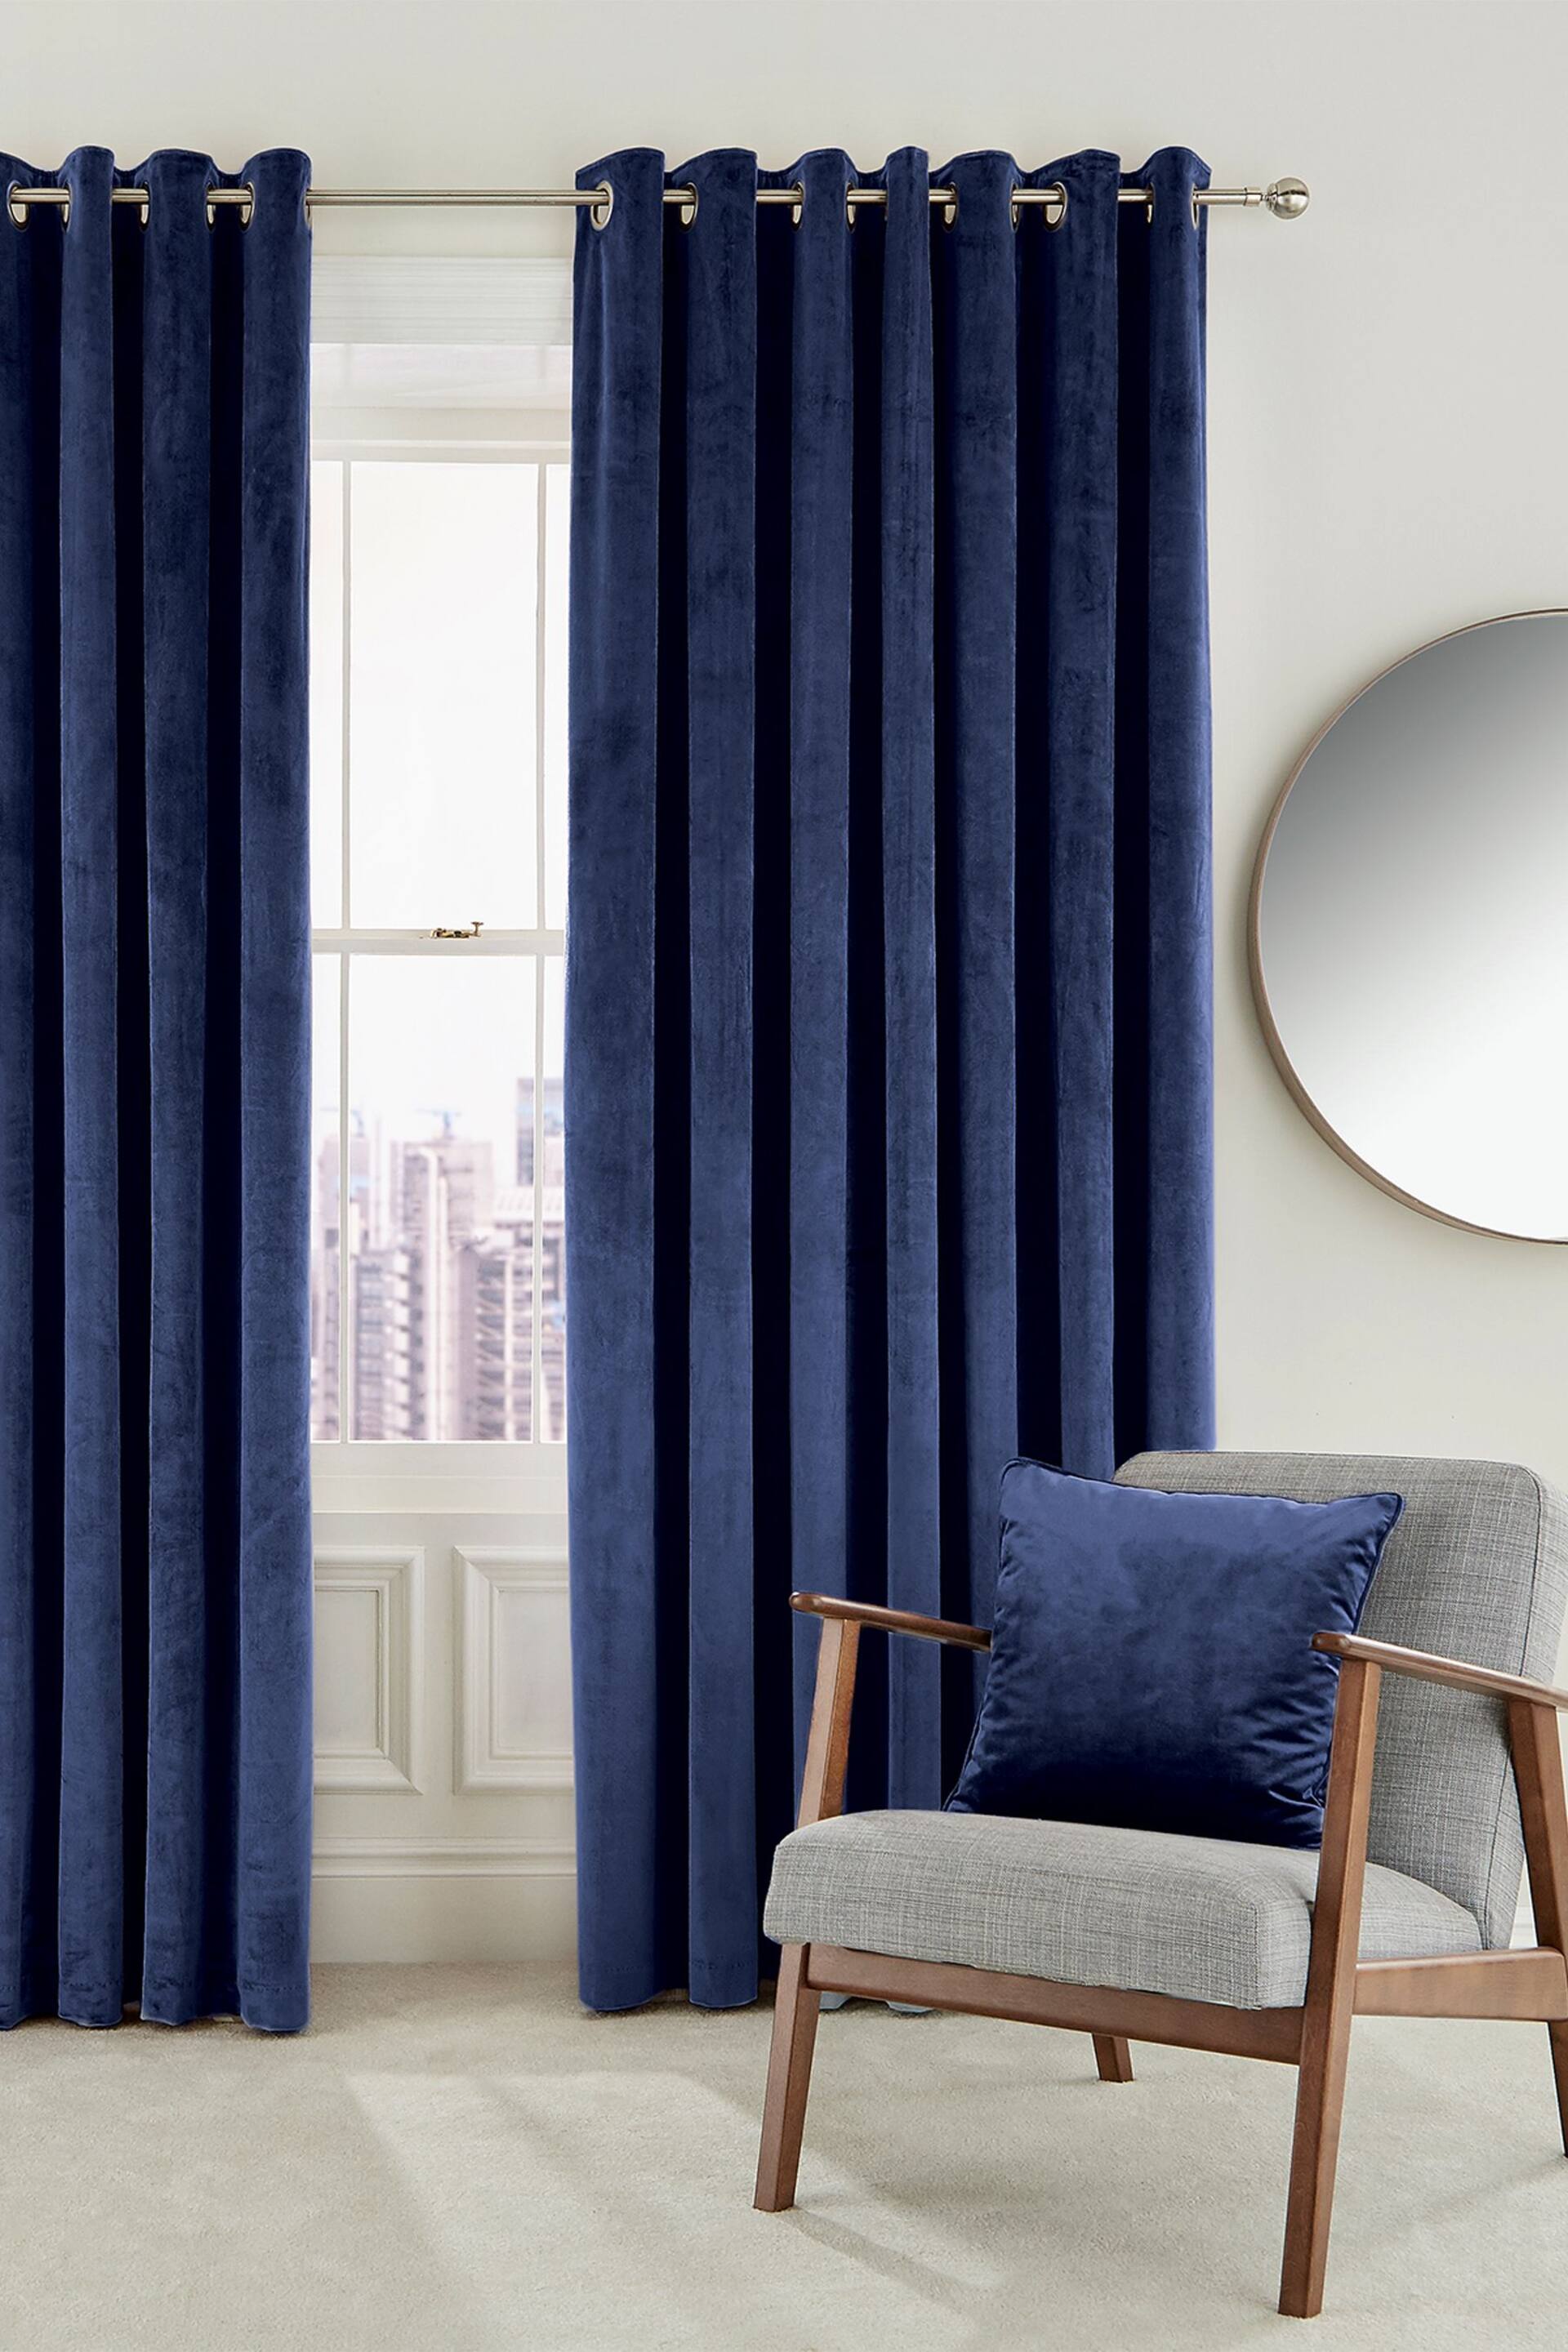 Helena Springfield Blue Escala Curtains - Image 2 of 3